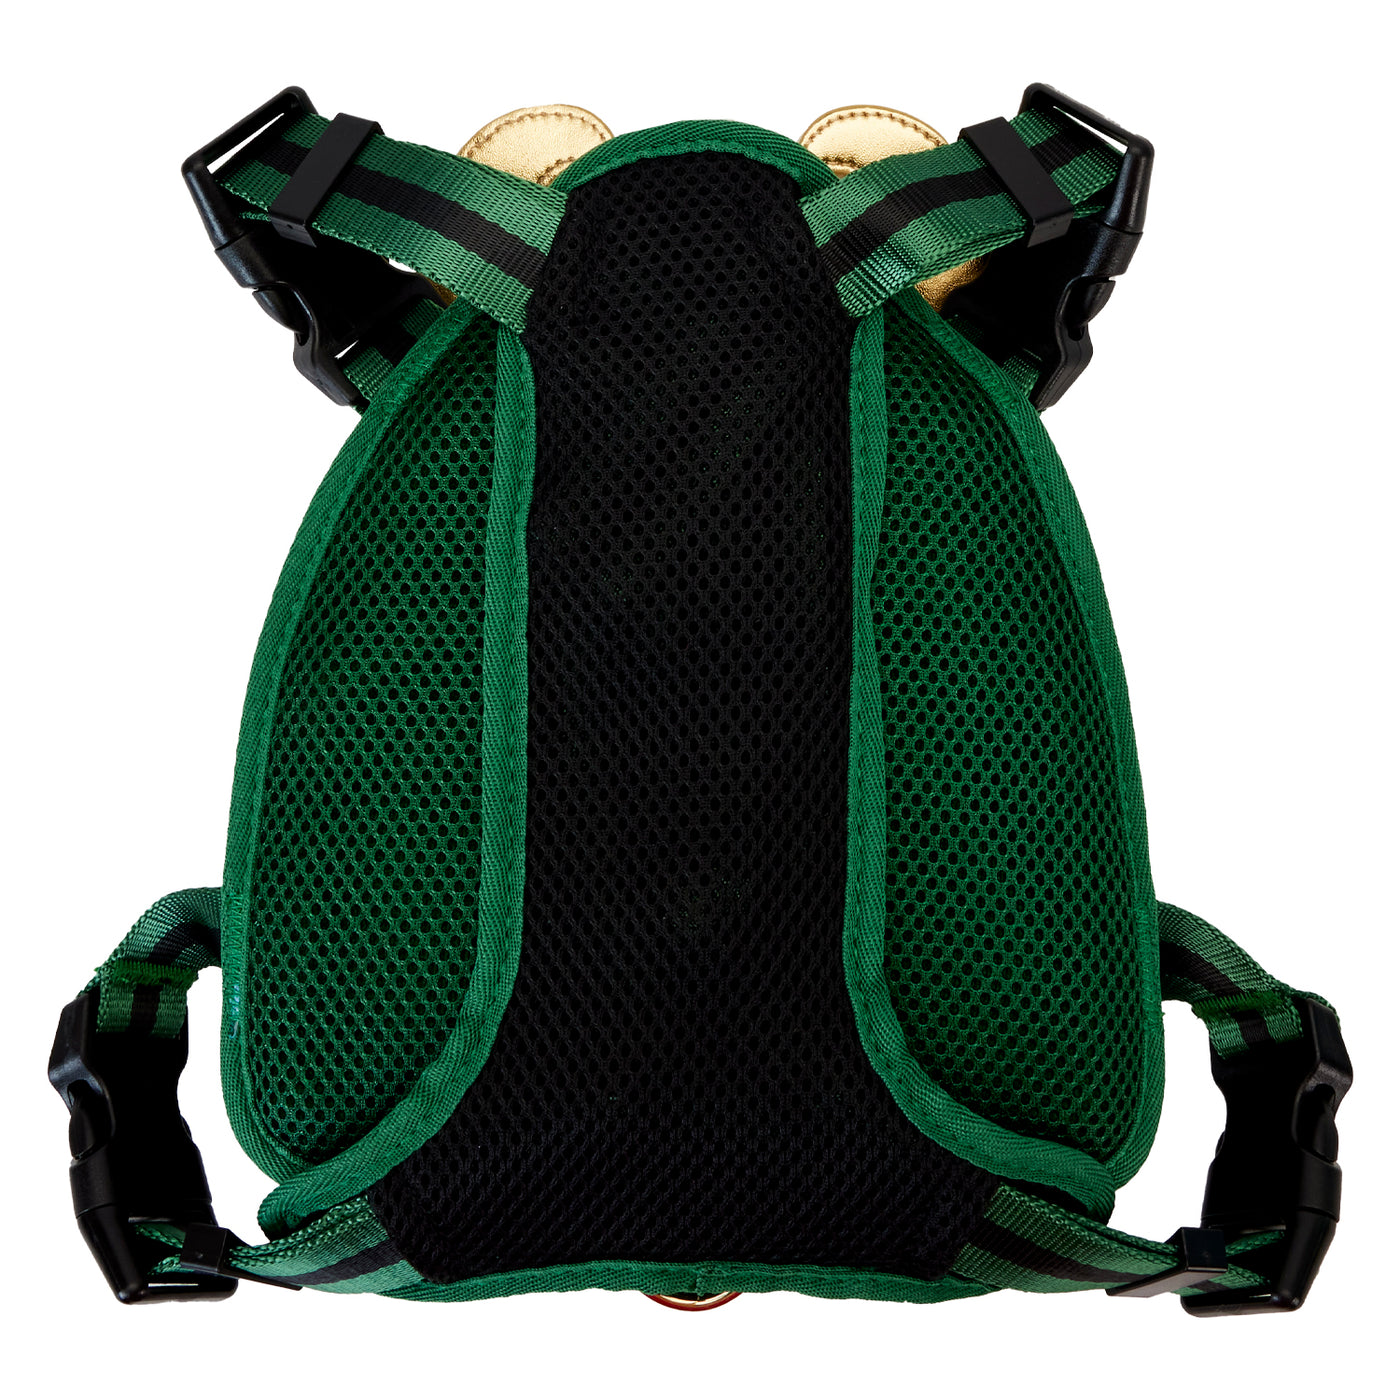 Loungefly Marvel Loki Cosplay Backpack Dog Harness